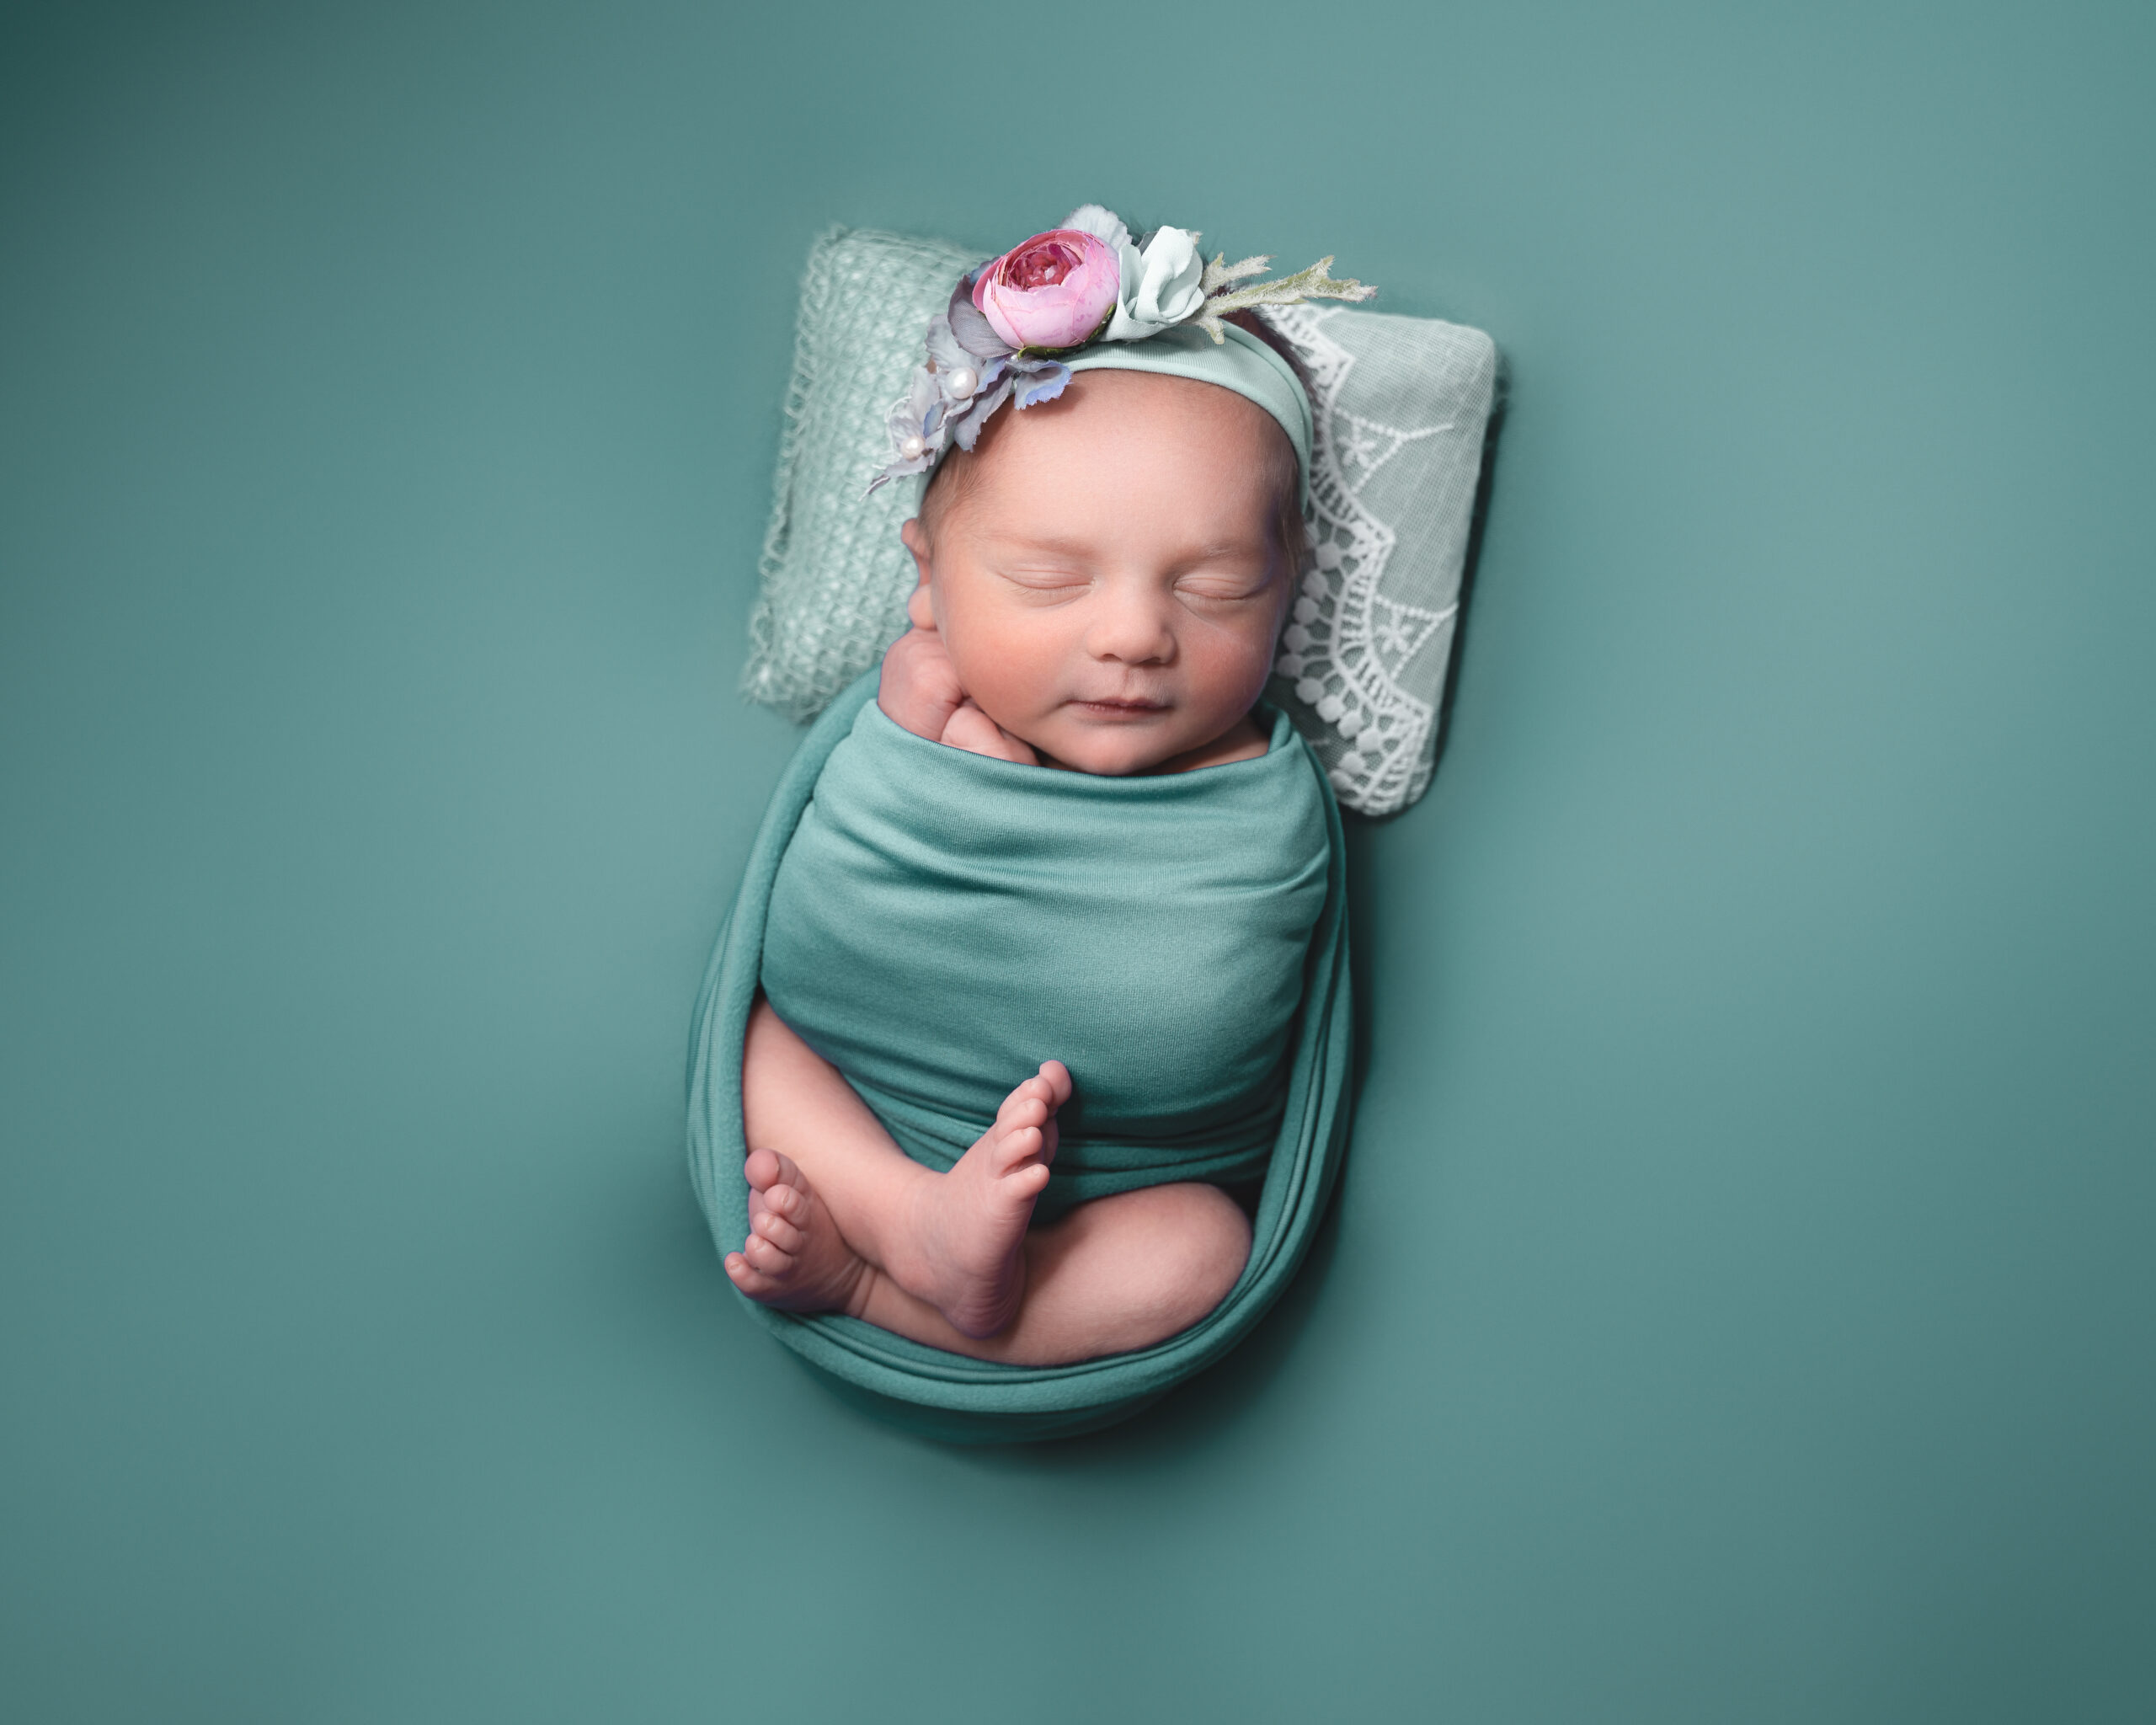 Baby girl in mint